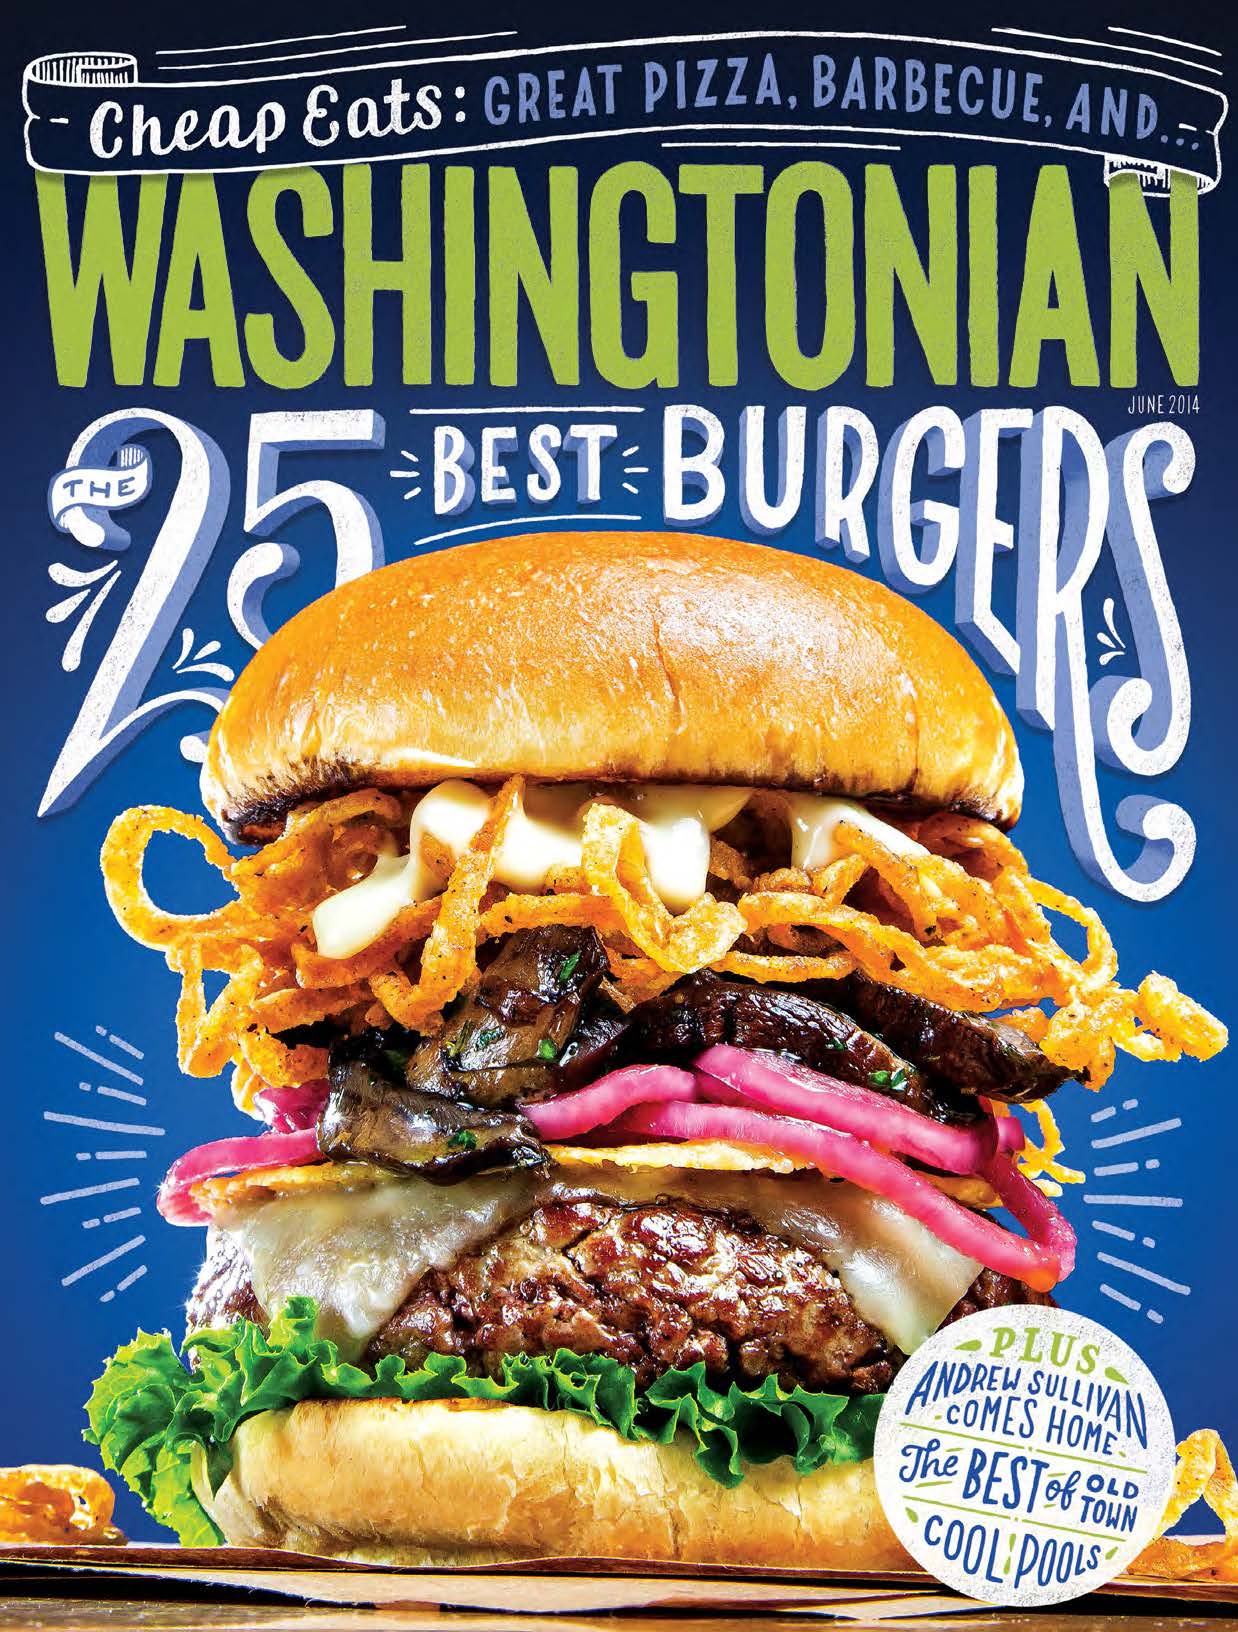 Washingtonian-June 2014, "The 25 Best Burgers"